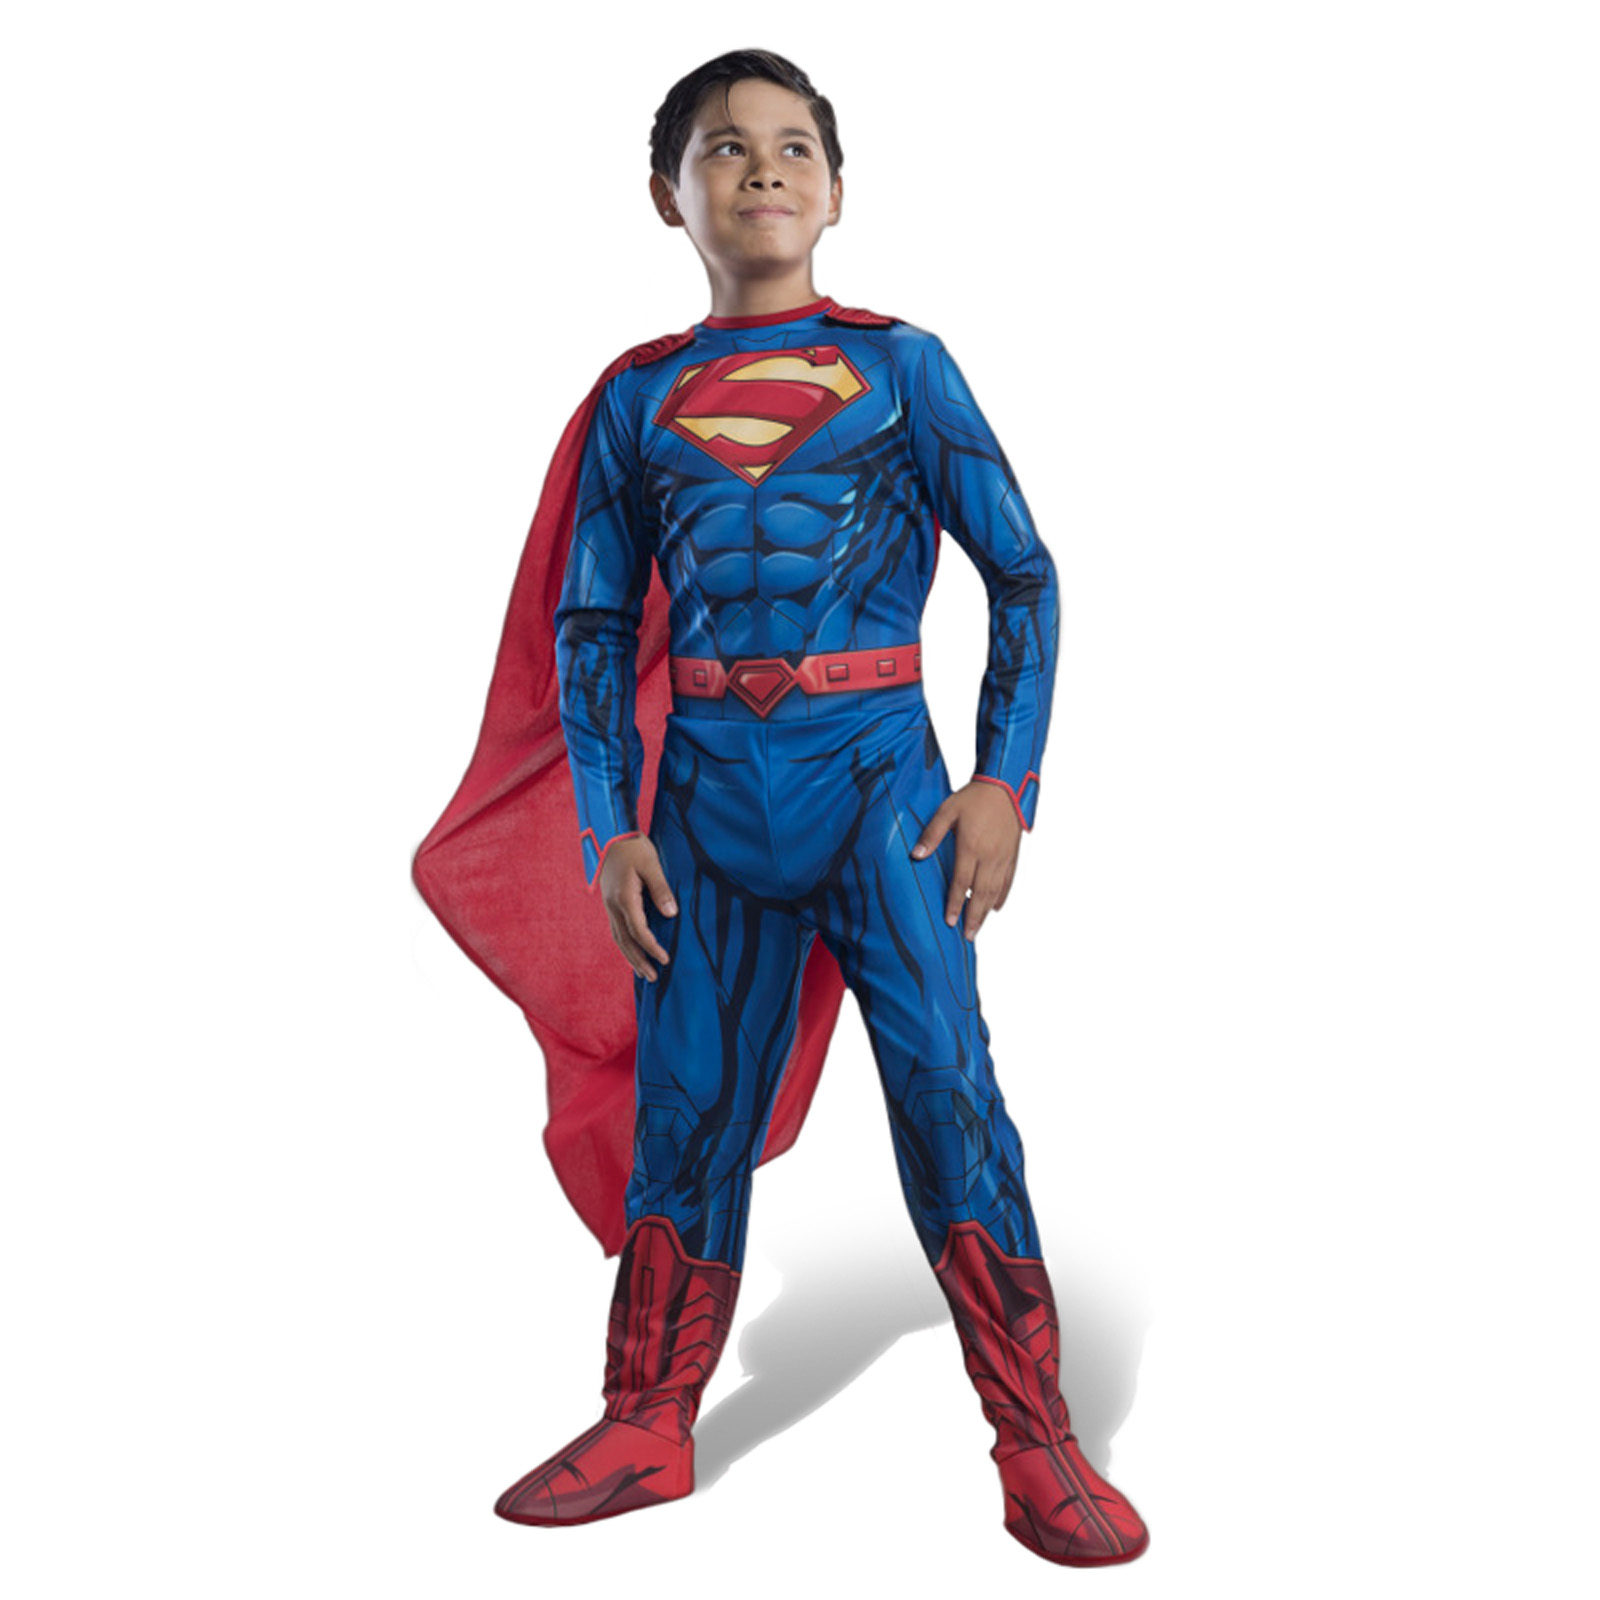 Superman - Children's Overall Costume